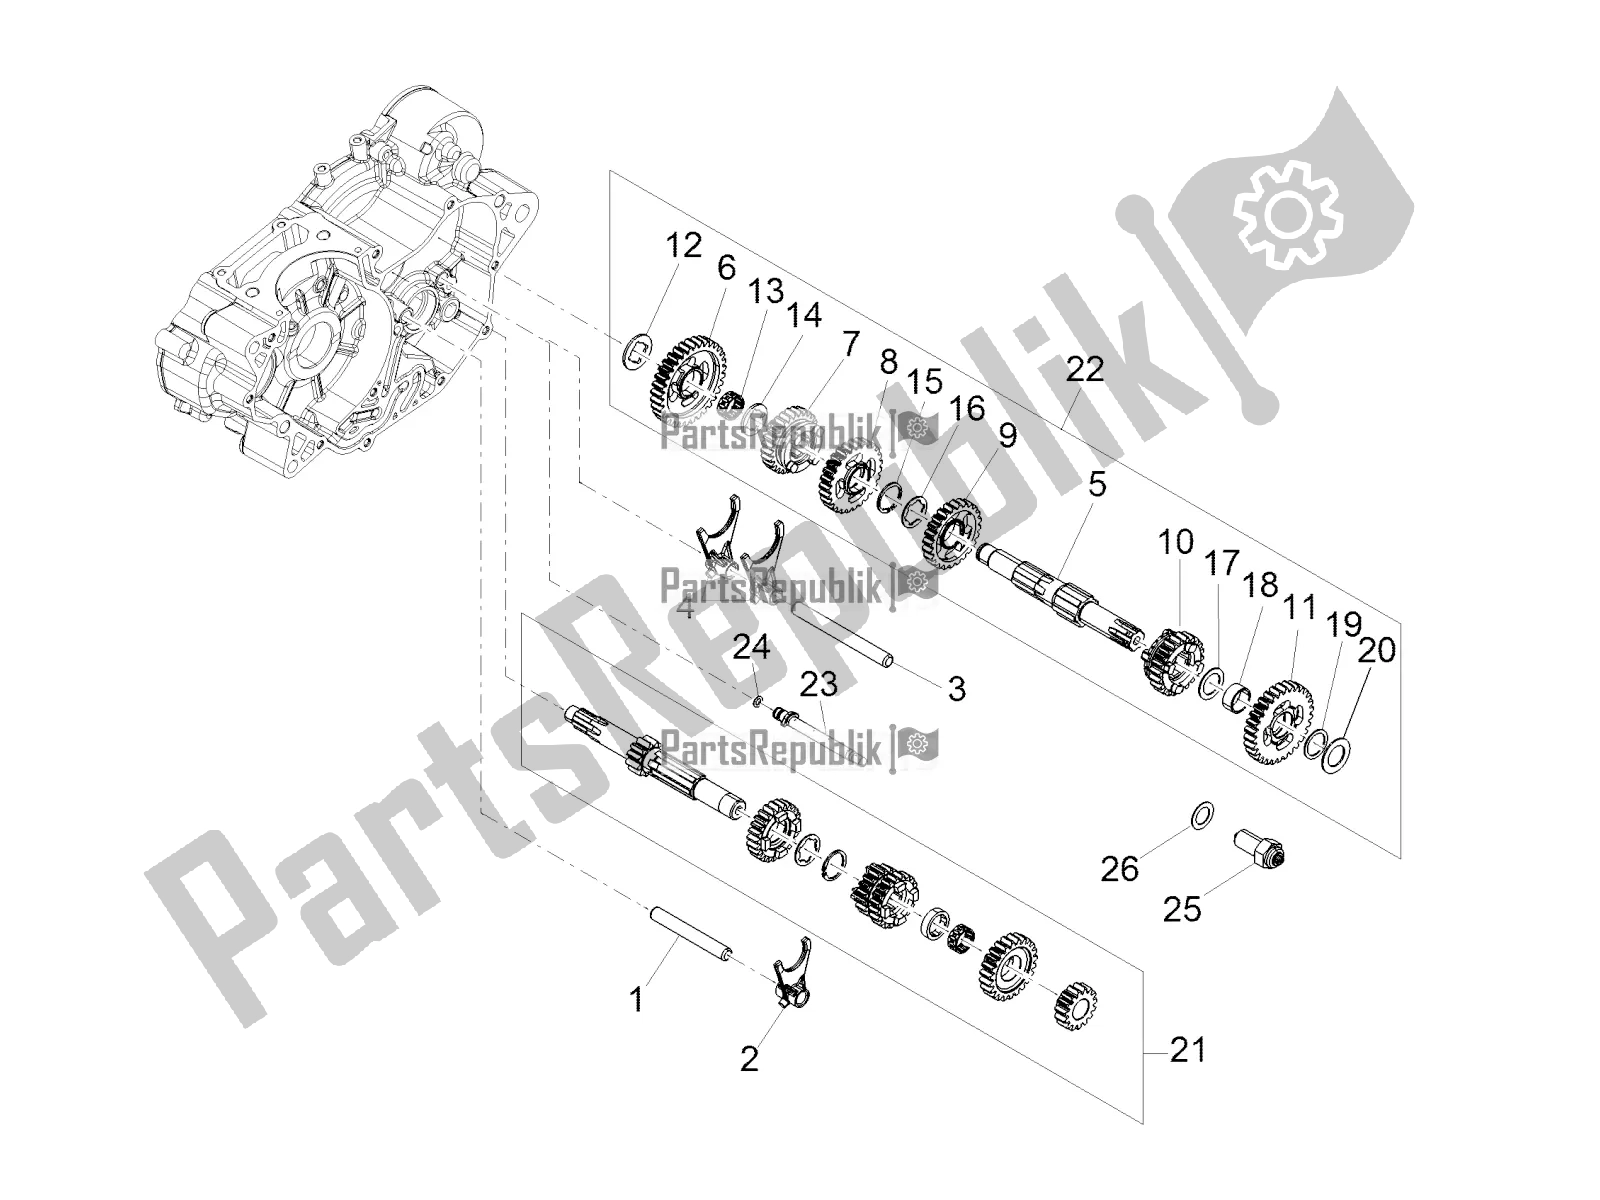 All parts for the Gear Box - Gear Assembly of the Aprilia Tuono 125 2020